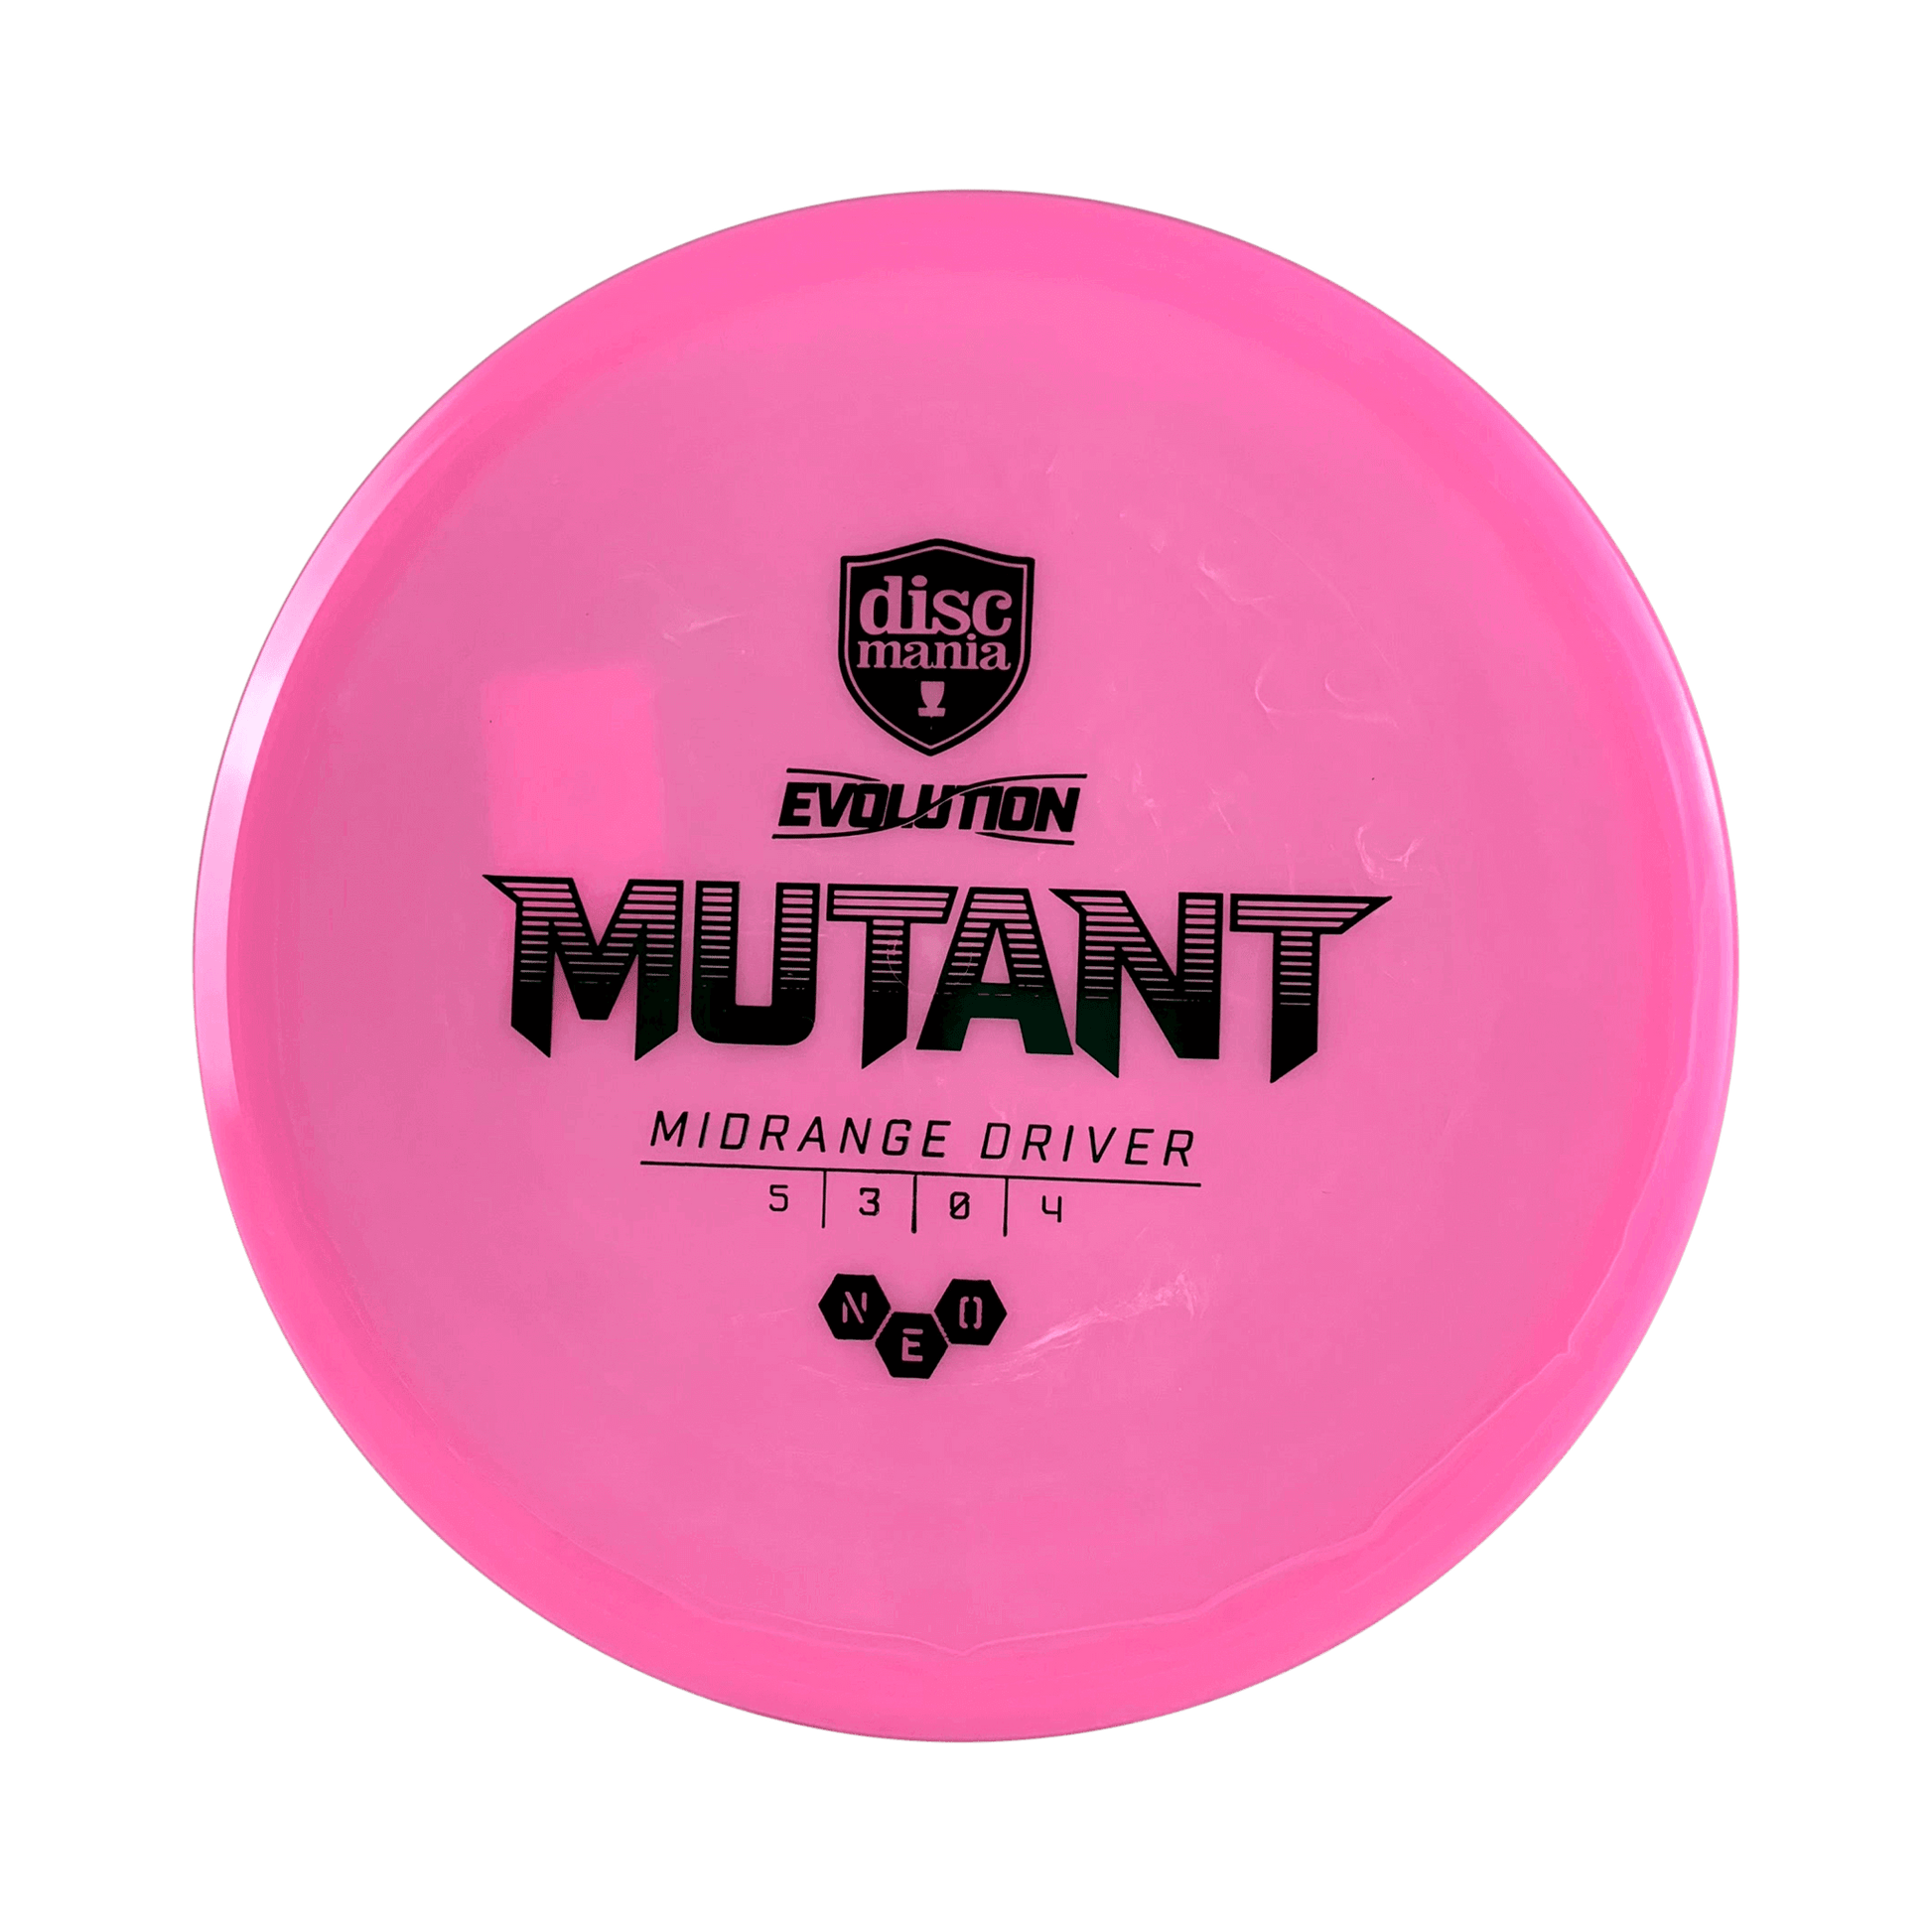 Neo Mutant - Evolution Disc Discmania pink 177 